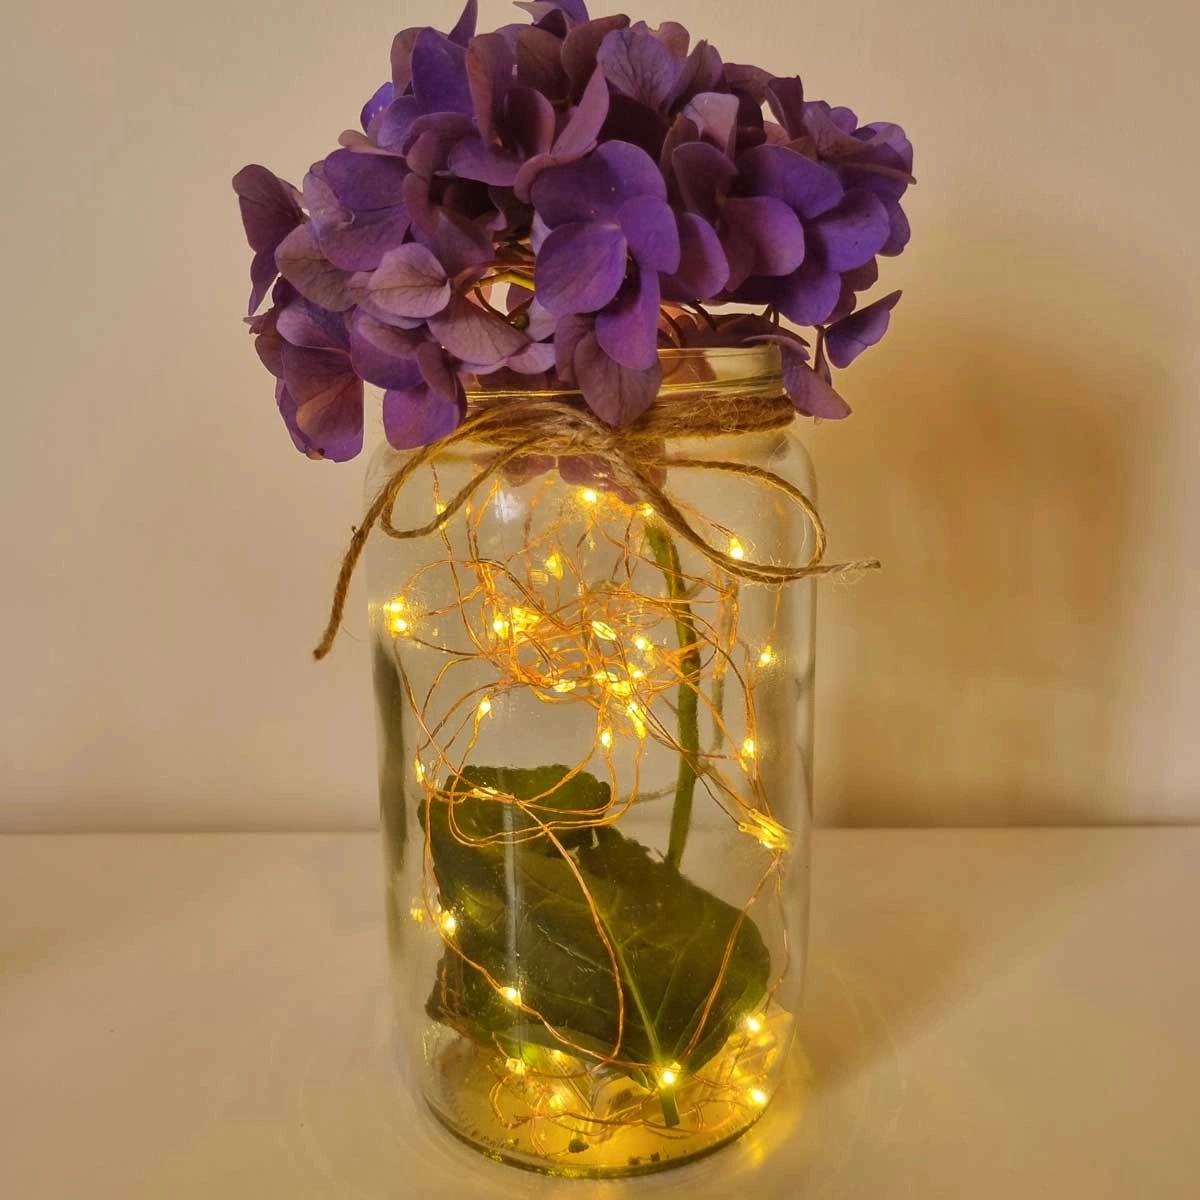 How To Make a Fairy Light Mason Jar Centerpiece with Flowers